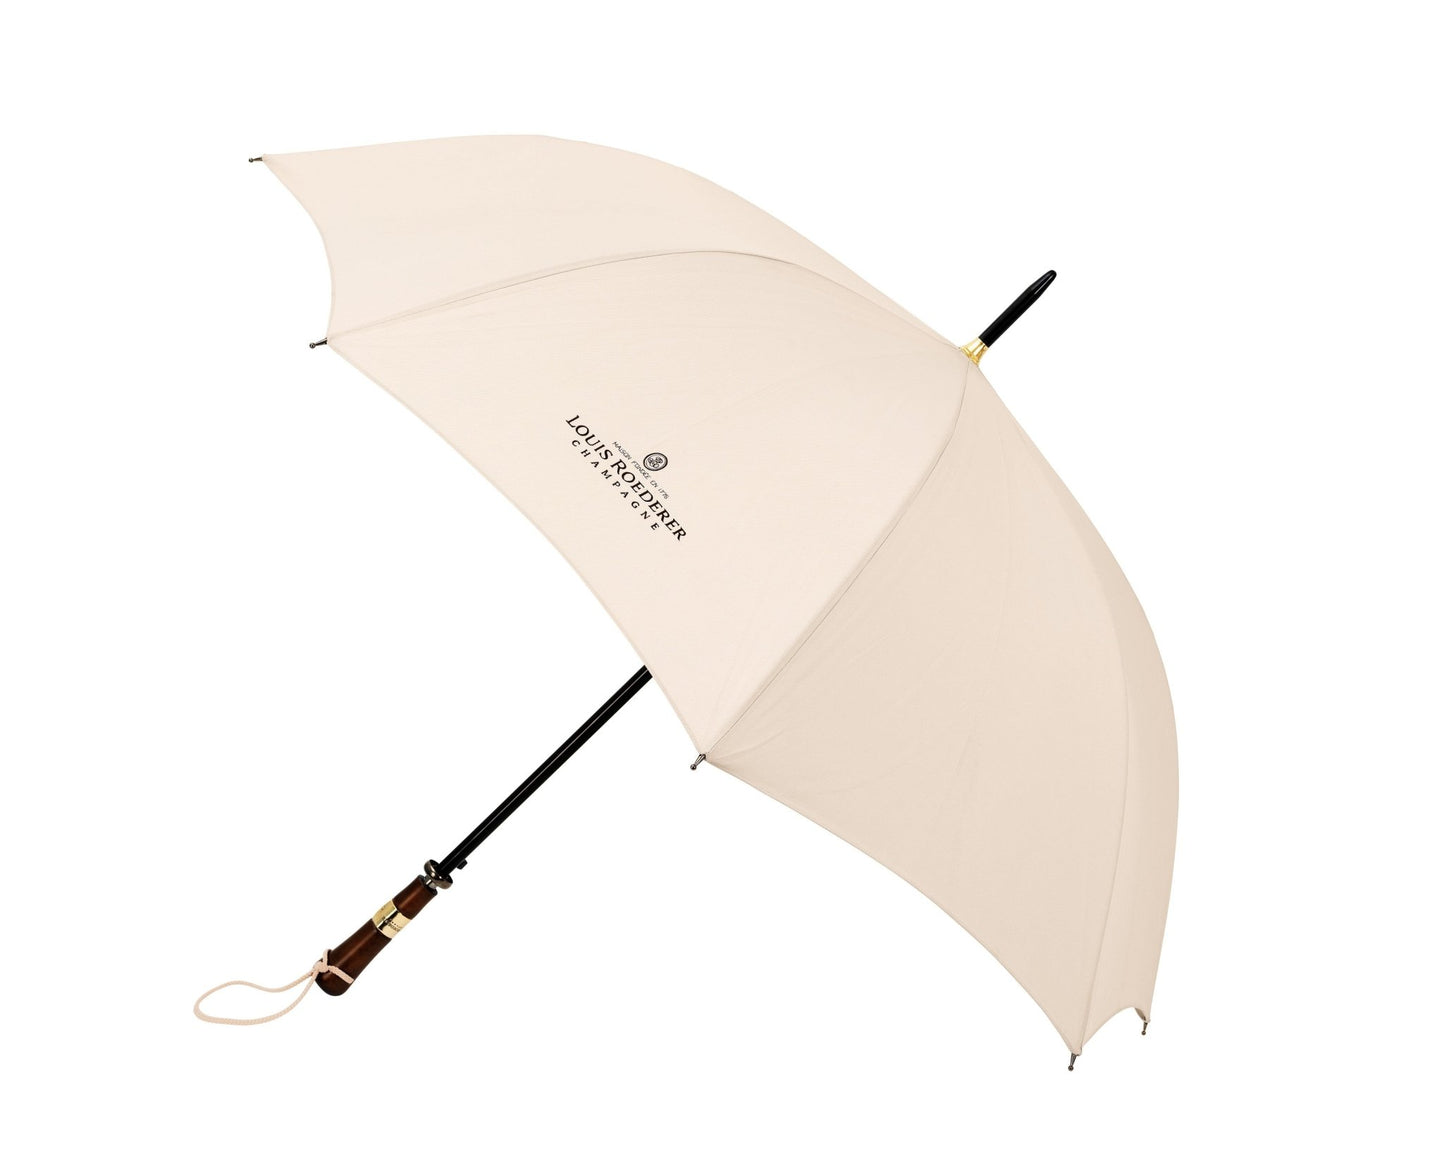 Louis Roederer Golf Umbrella - Grand Vin Pte Ltd